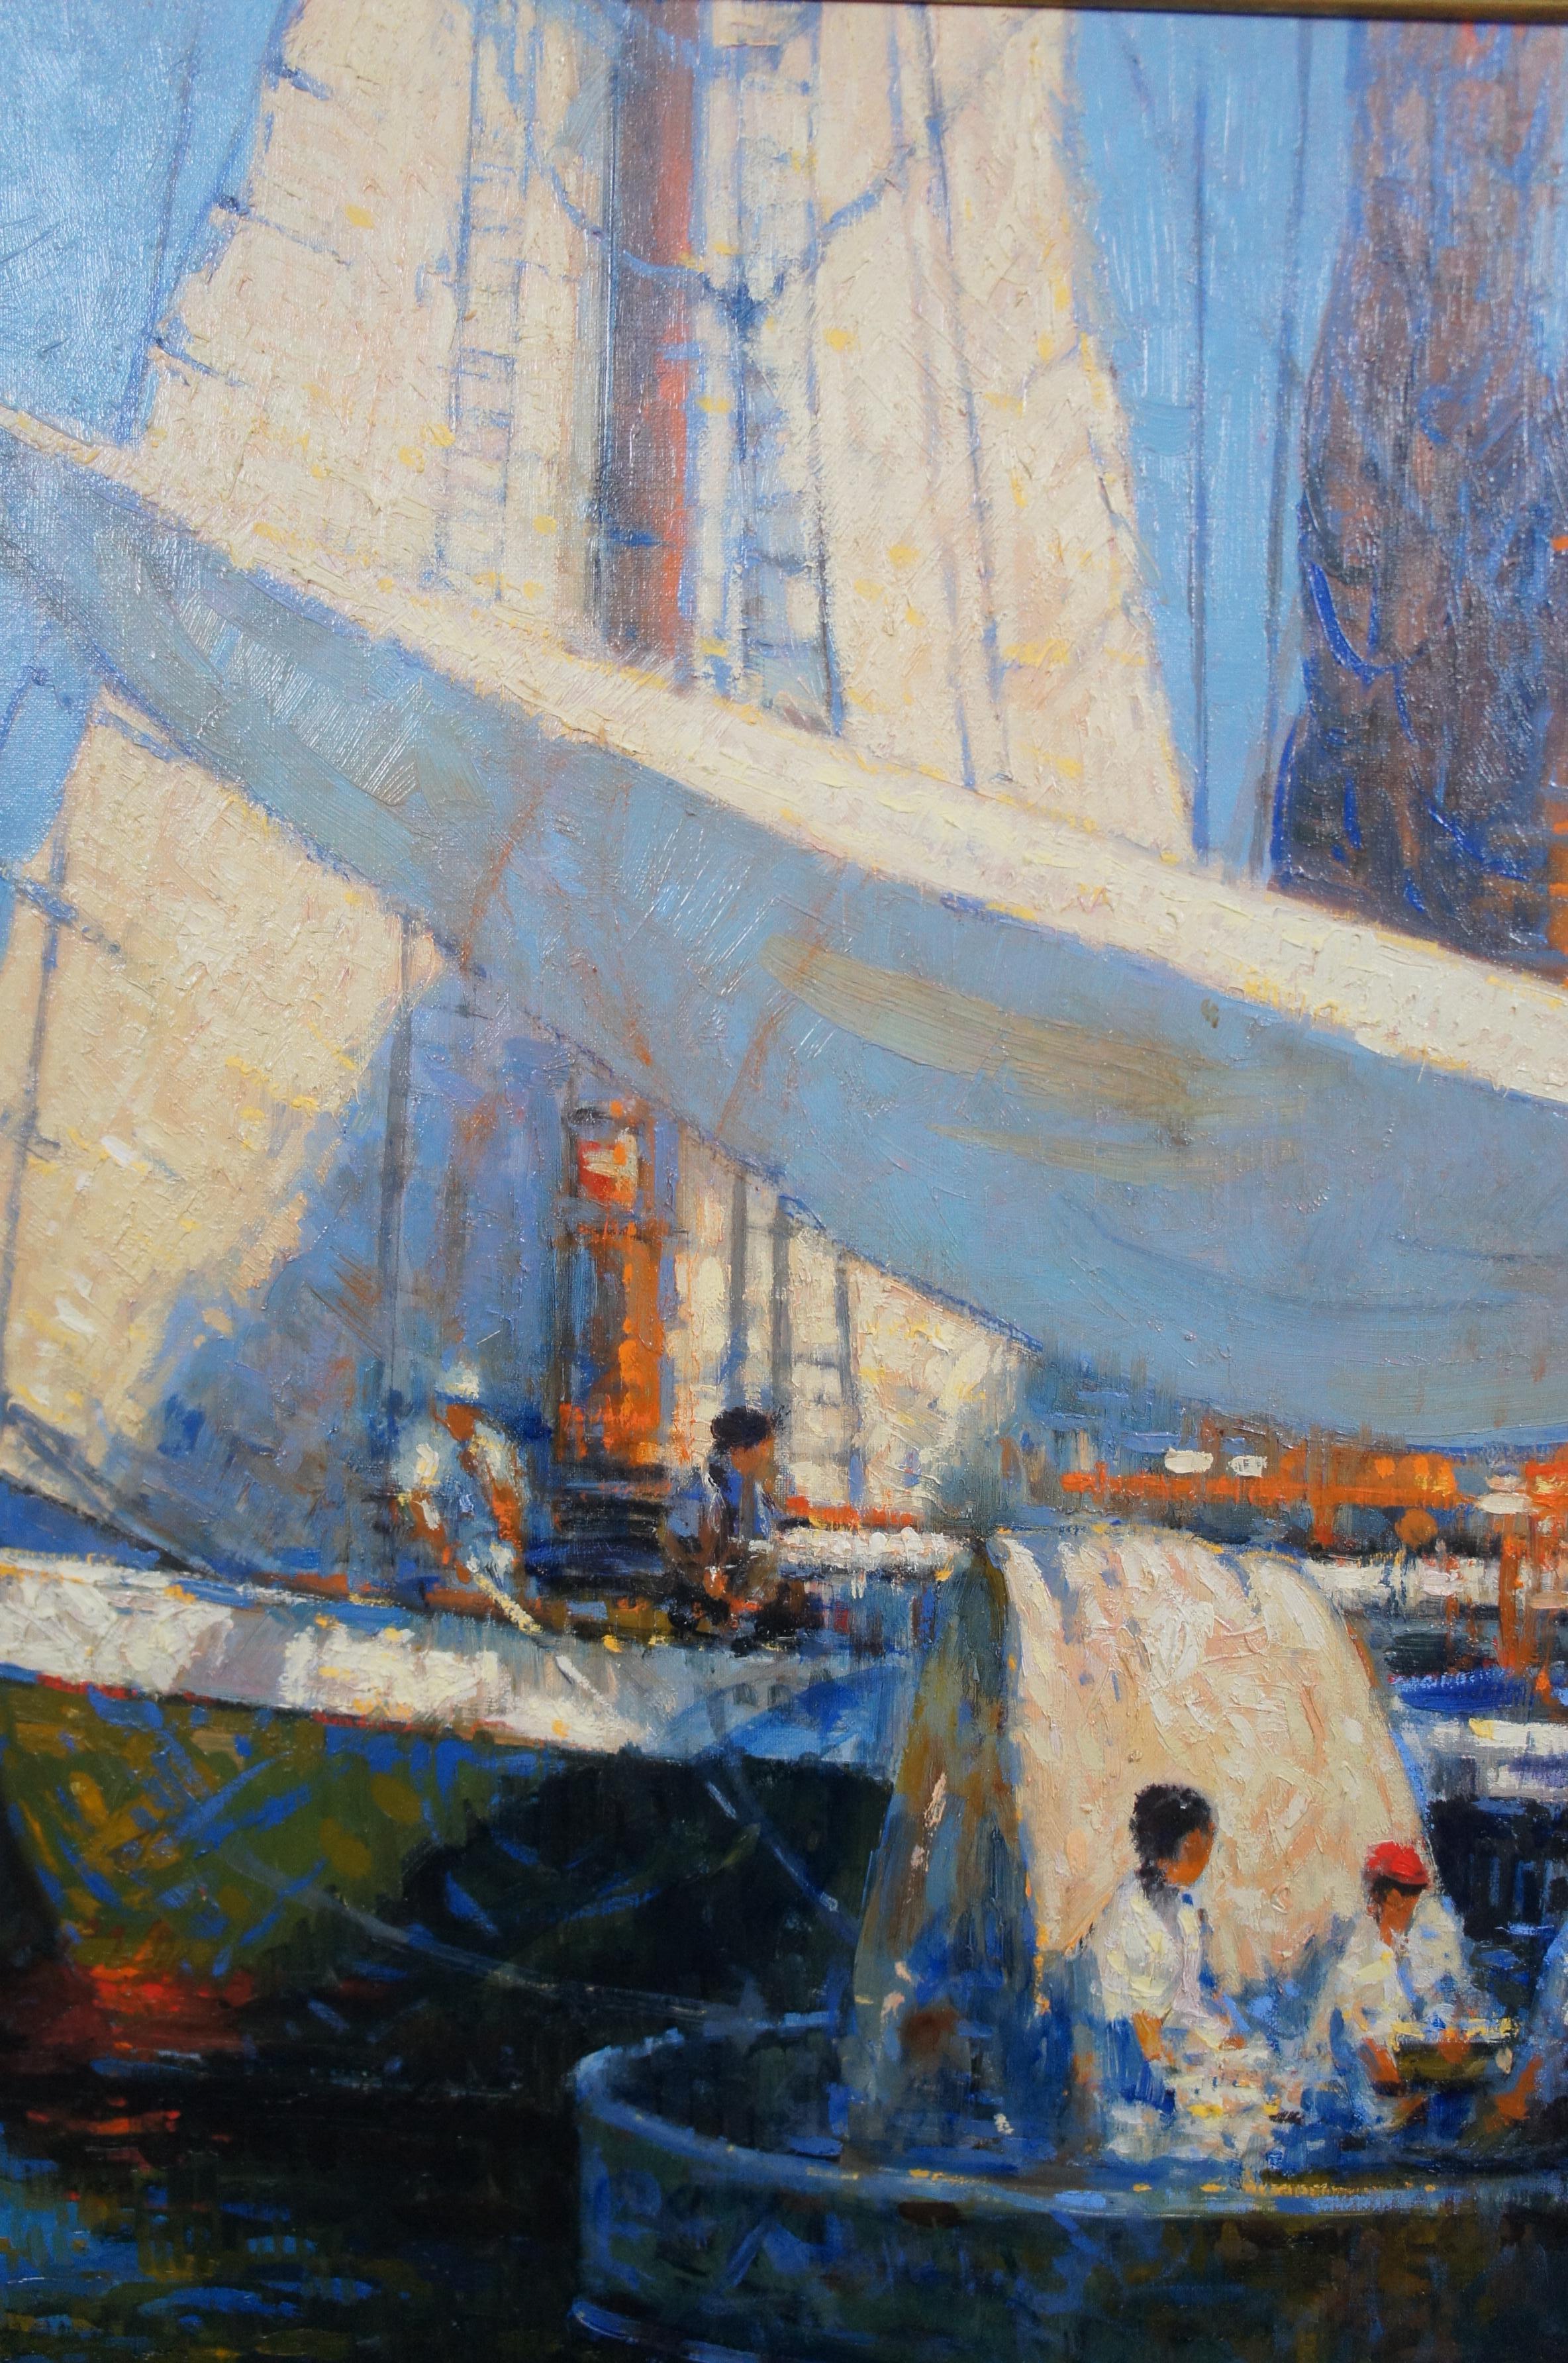 John Terelak 'Upland Game' Impressionist Oil Painting Dock Sailboats Harbor 1